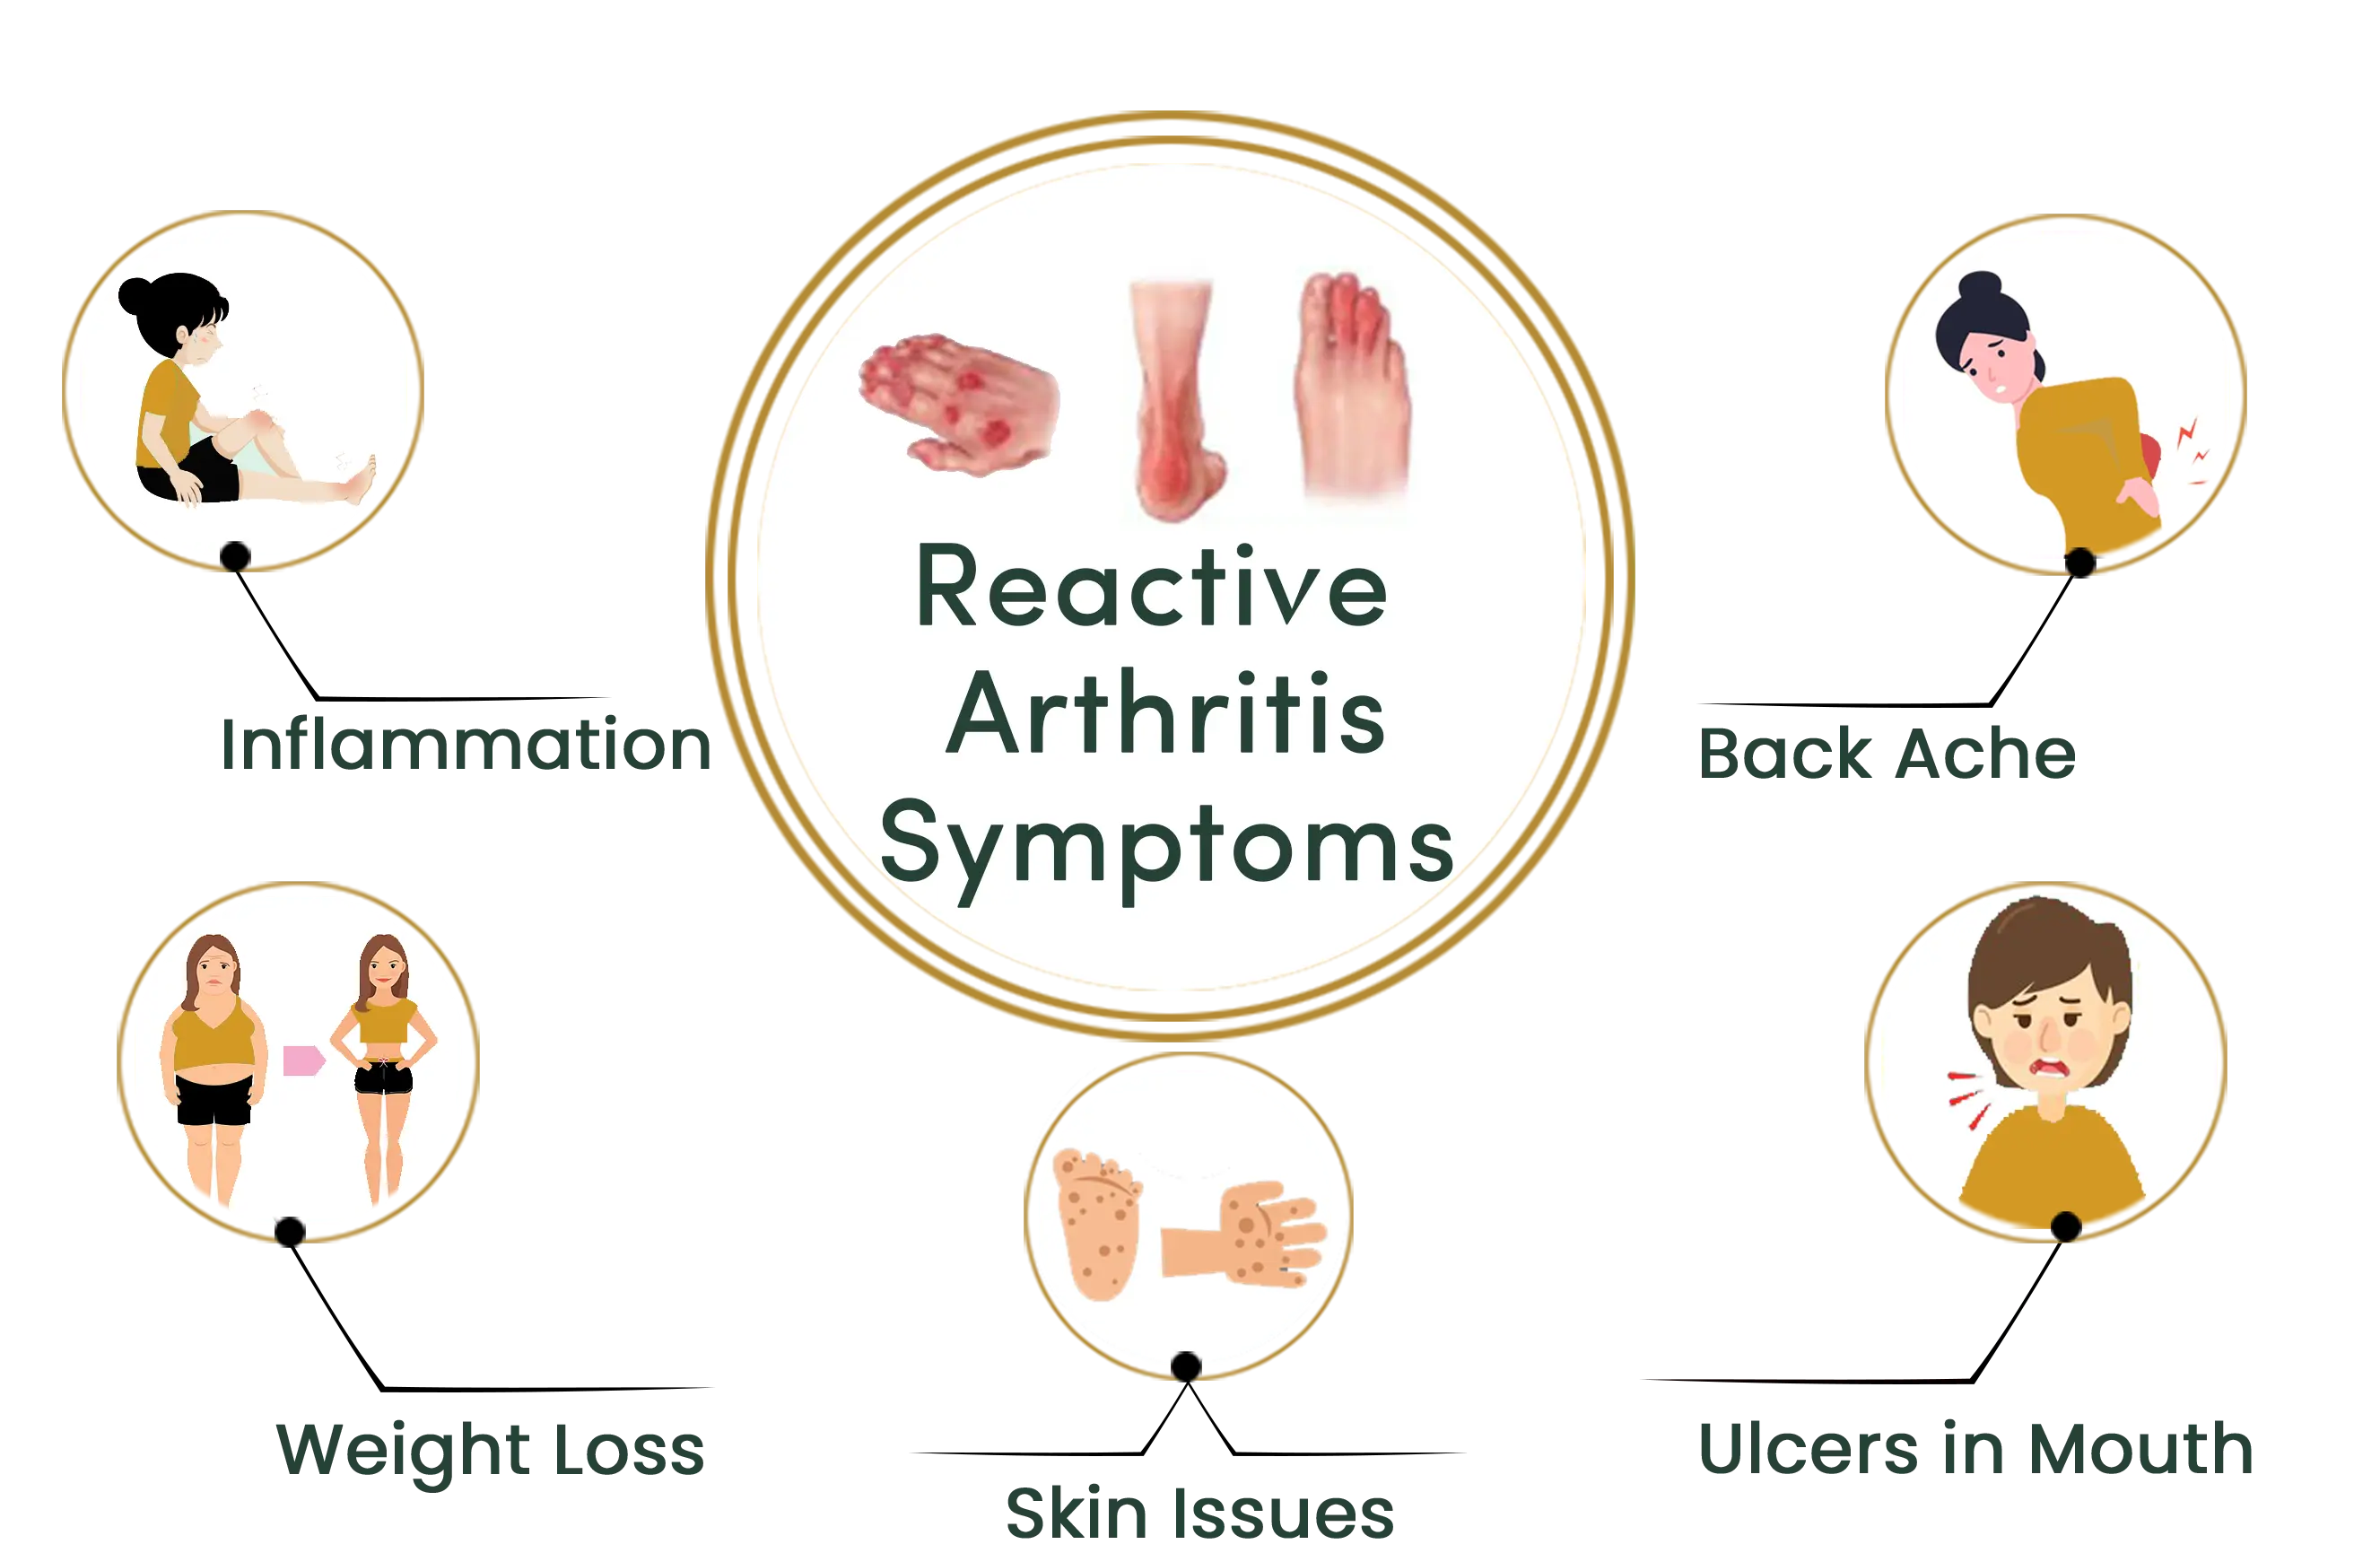 Reactive Arthritis Symptoms